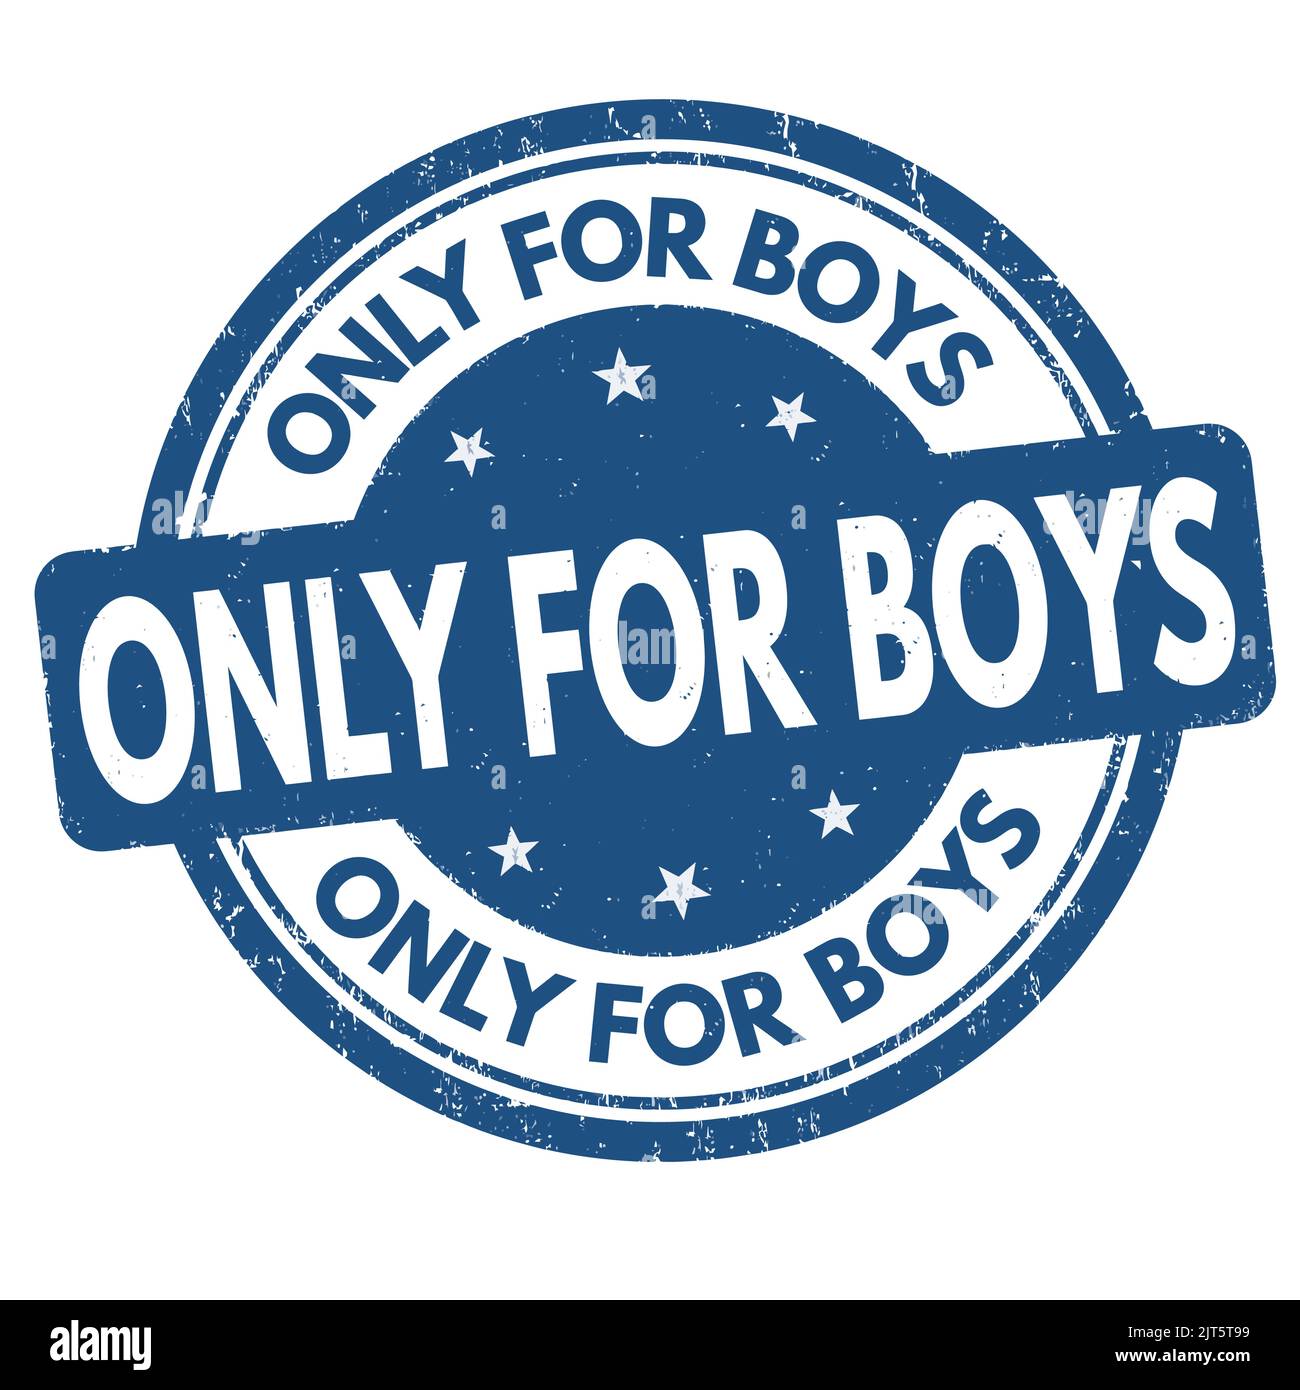 Only for boys grunge rubber stamp on white background, vector illustration Stock Vector